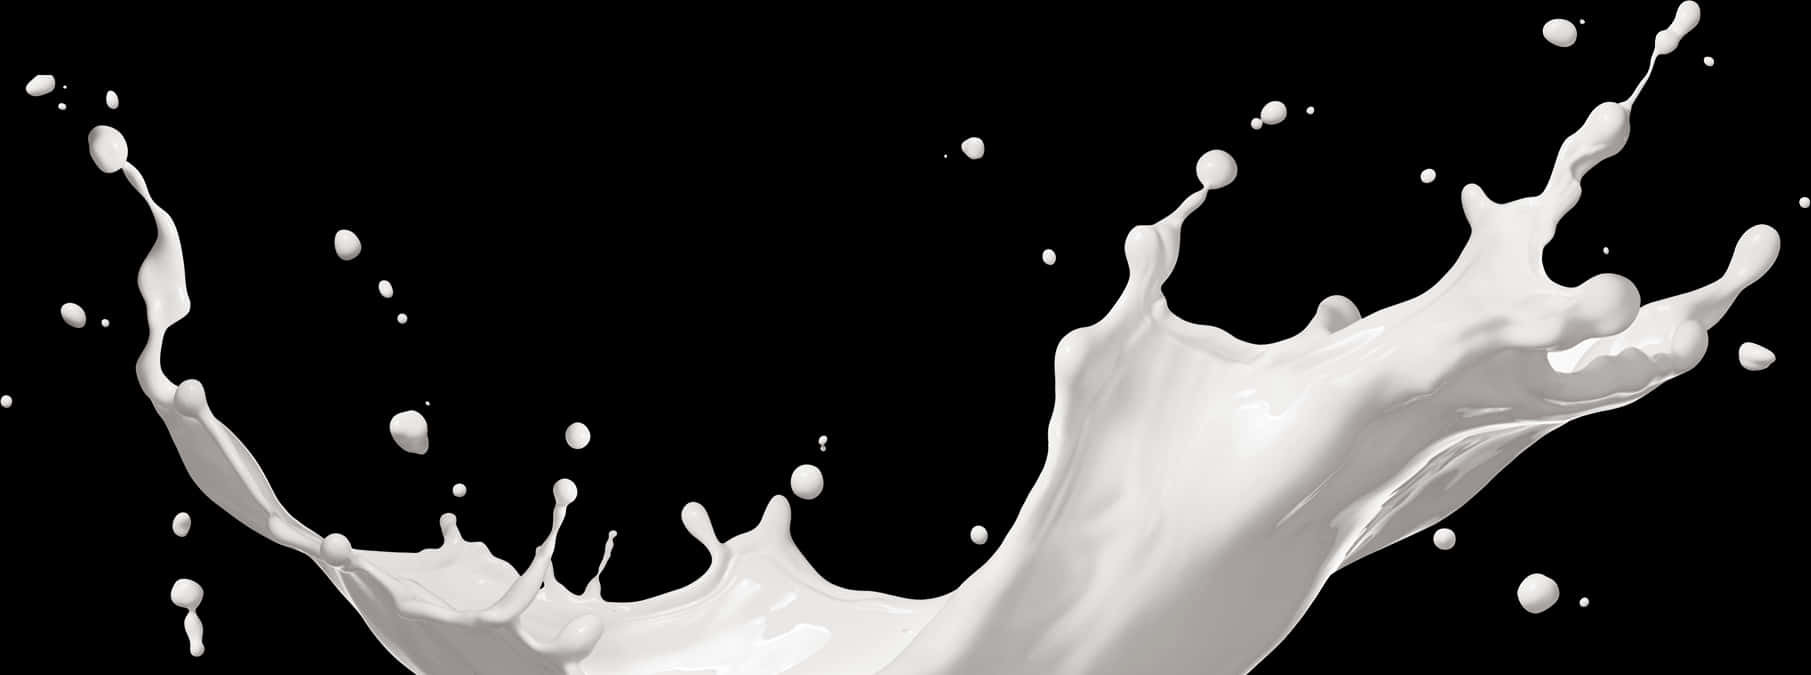 Dynamic Milk Splashon Black Background.jpg PNG image